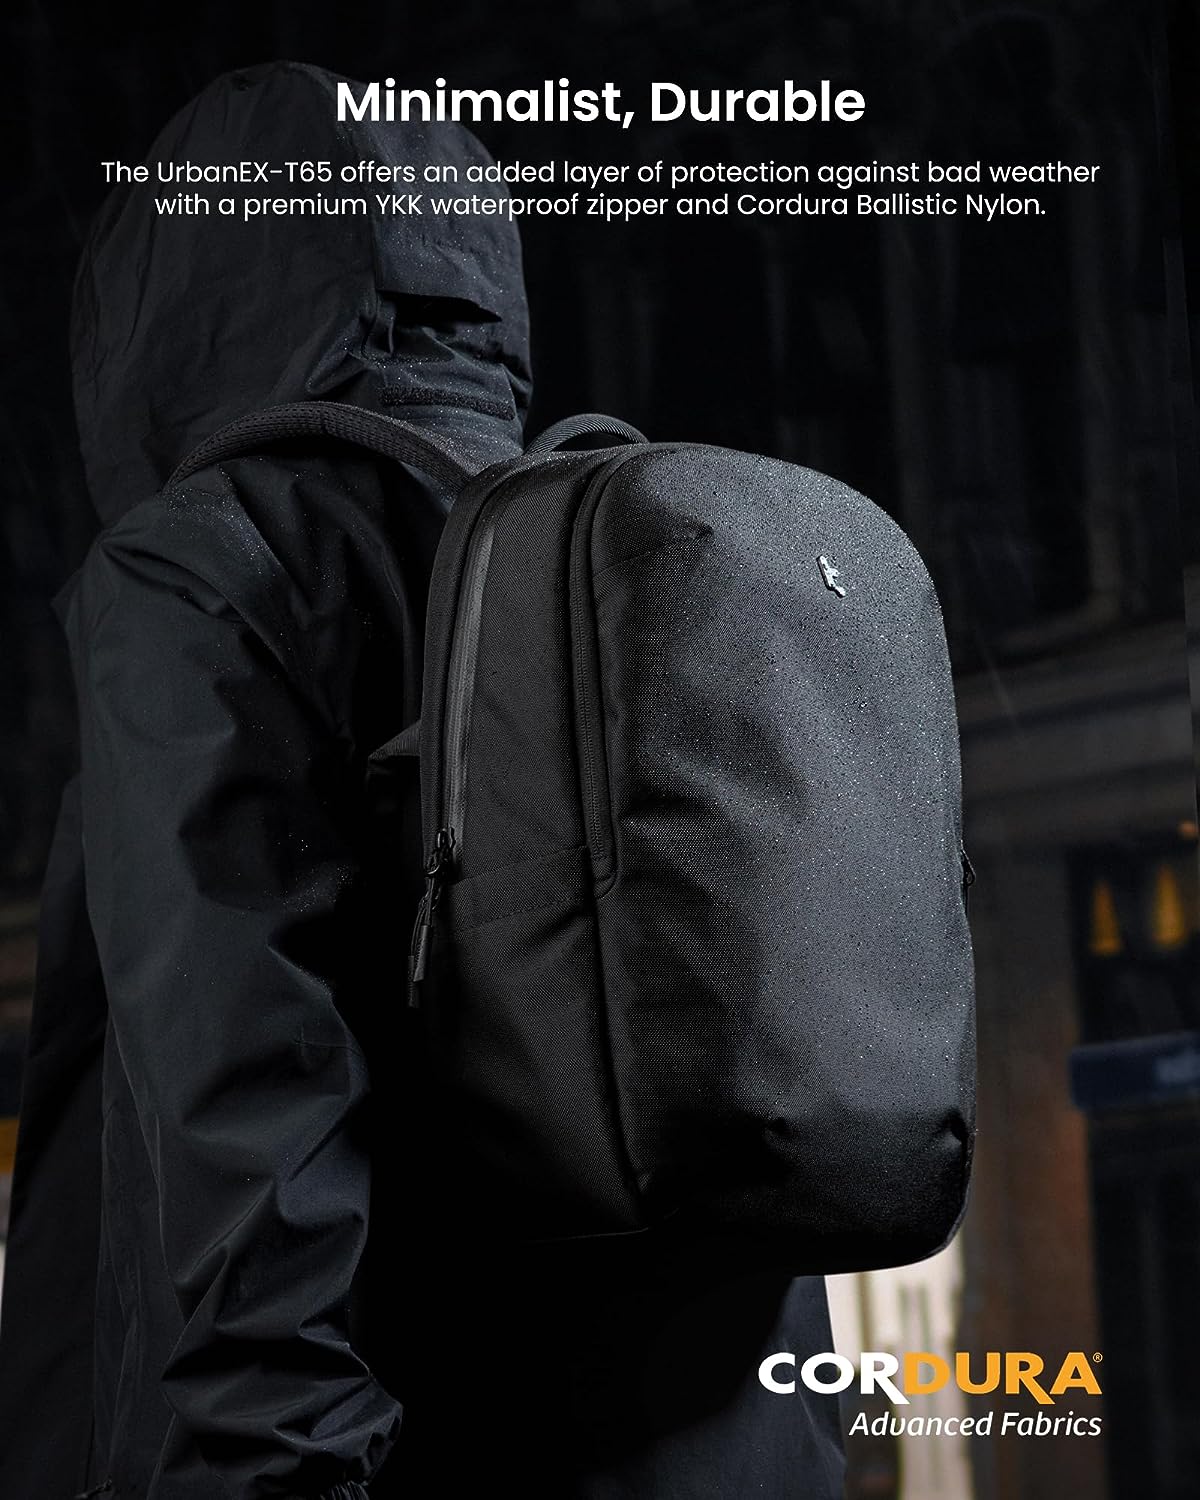 tomtoc 15.6 Inch Premium Urban Laptop Backpack - Black